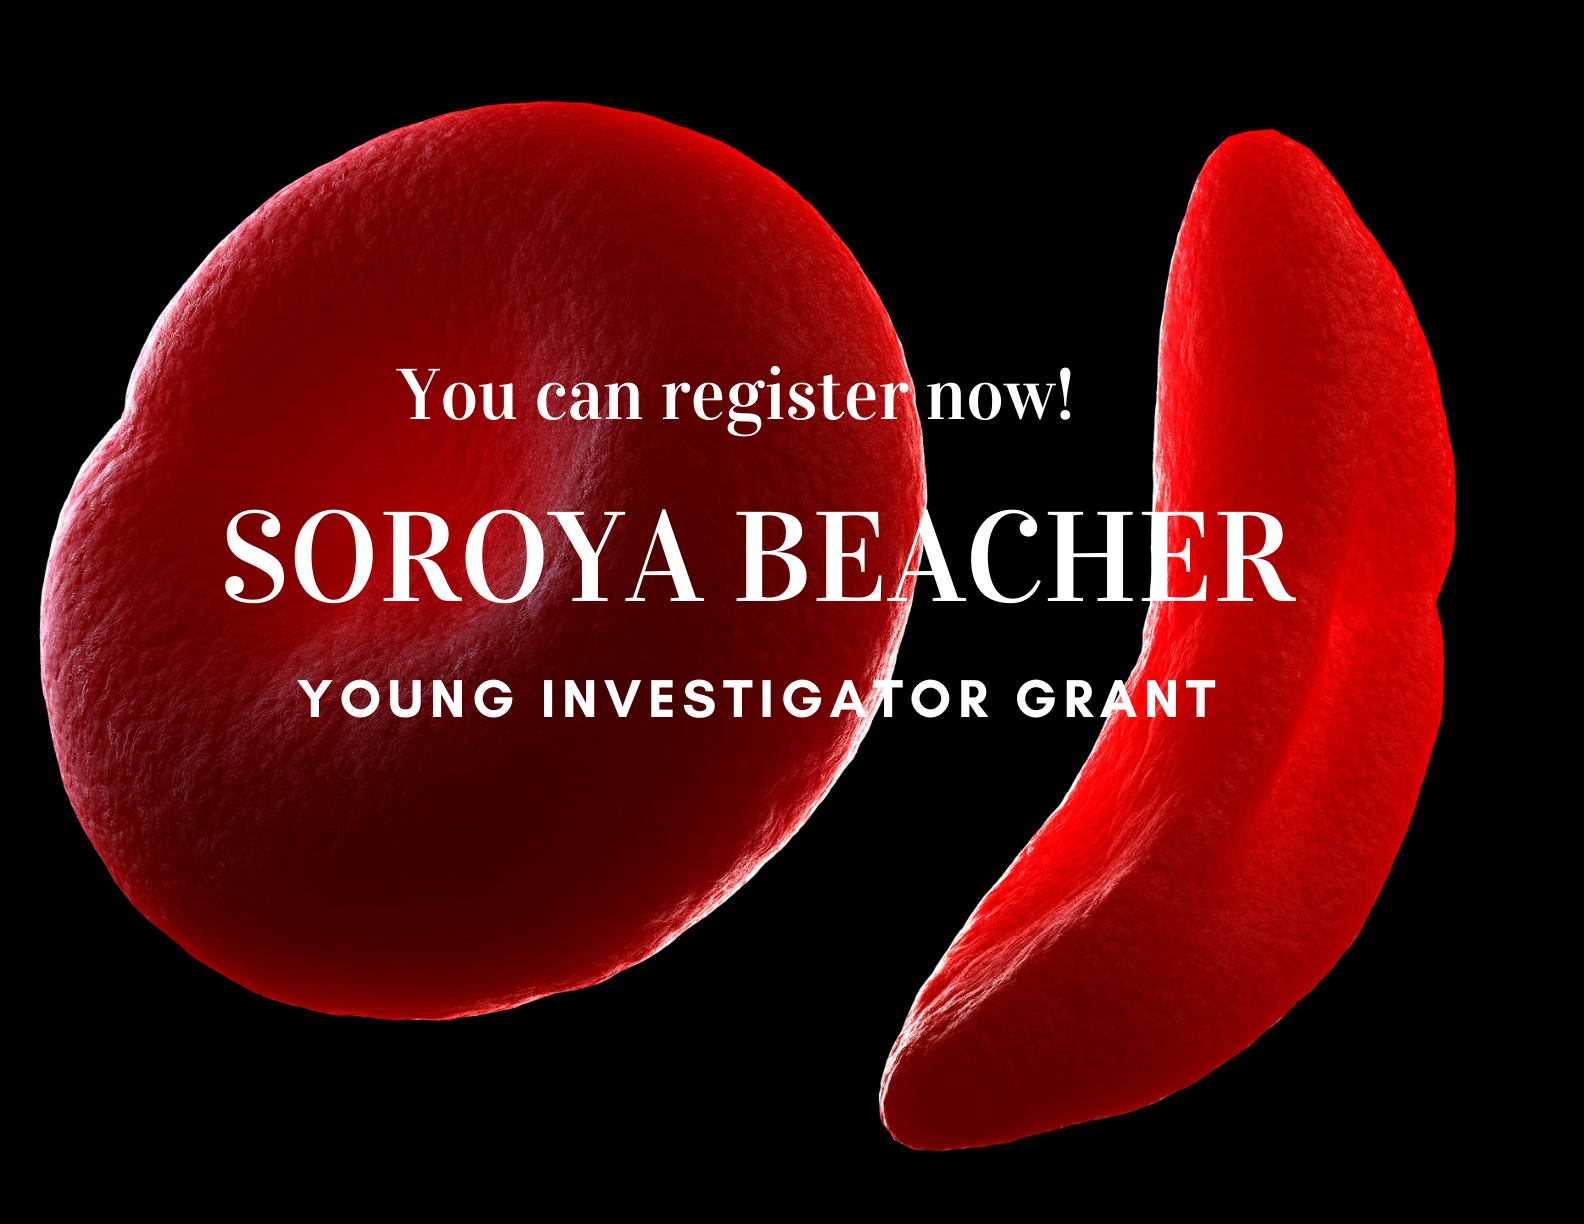 Soroya Beacher Young Investigator Grant